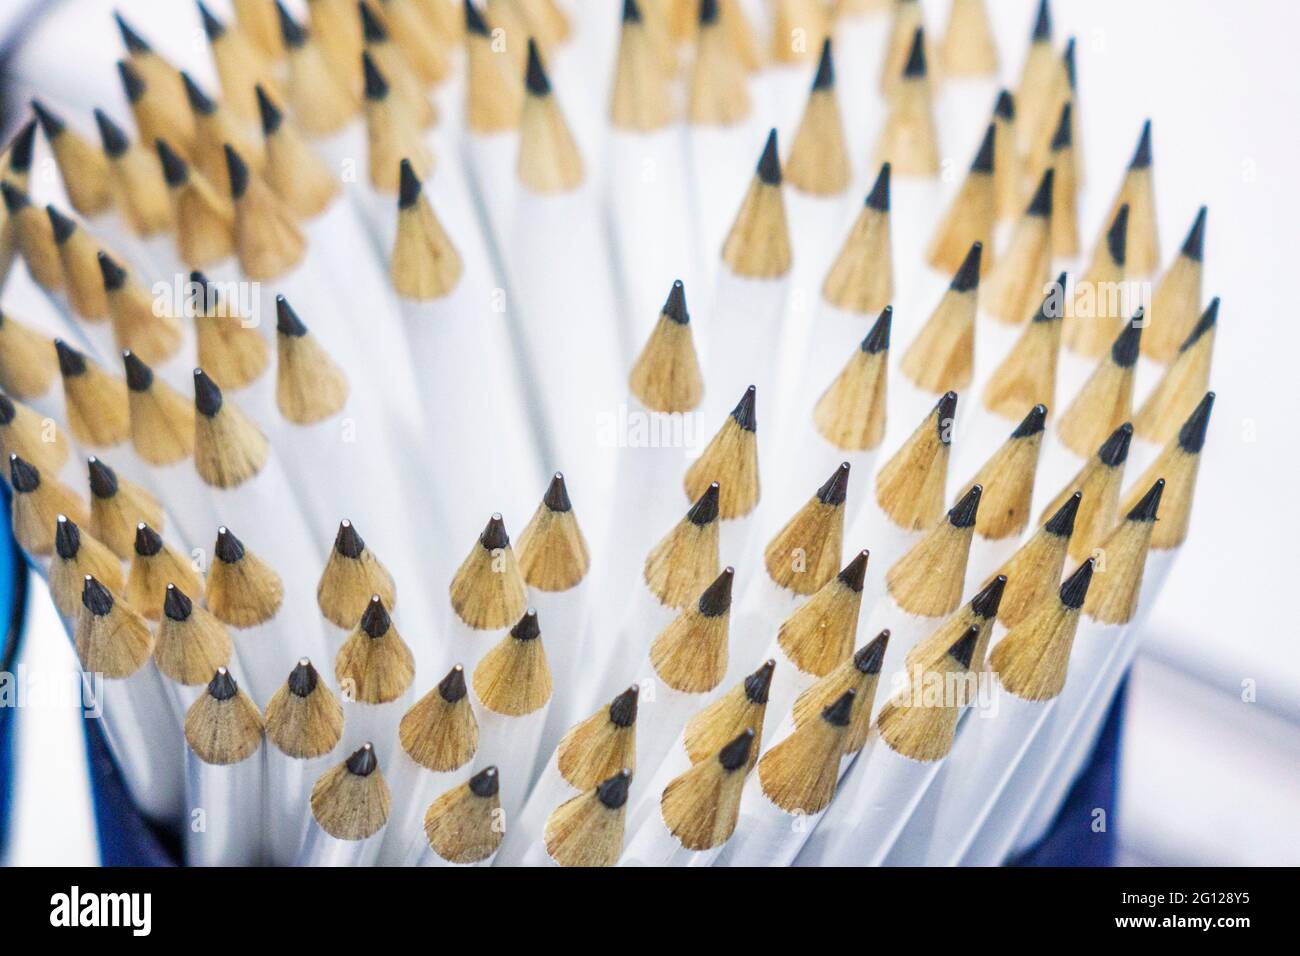 Argentina Buenos Aires sharpened pencil display circular tips Stock Photo